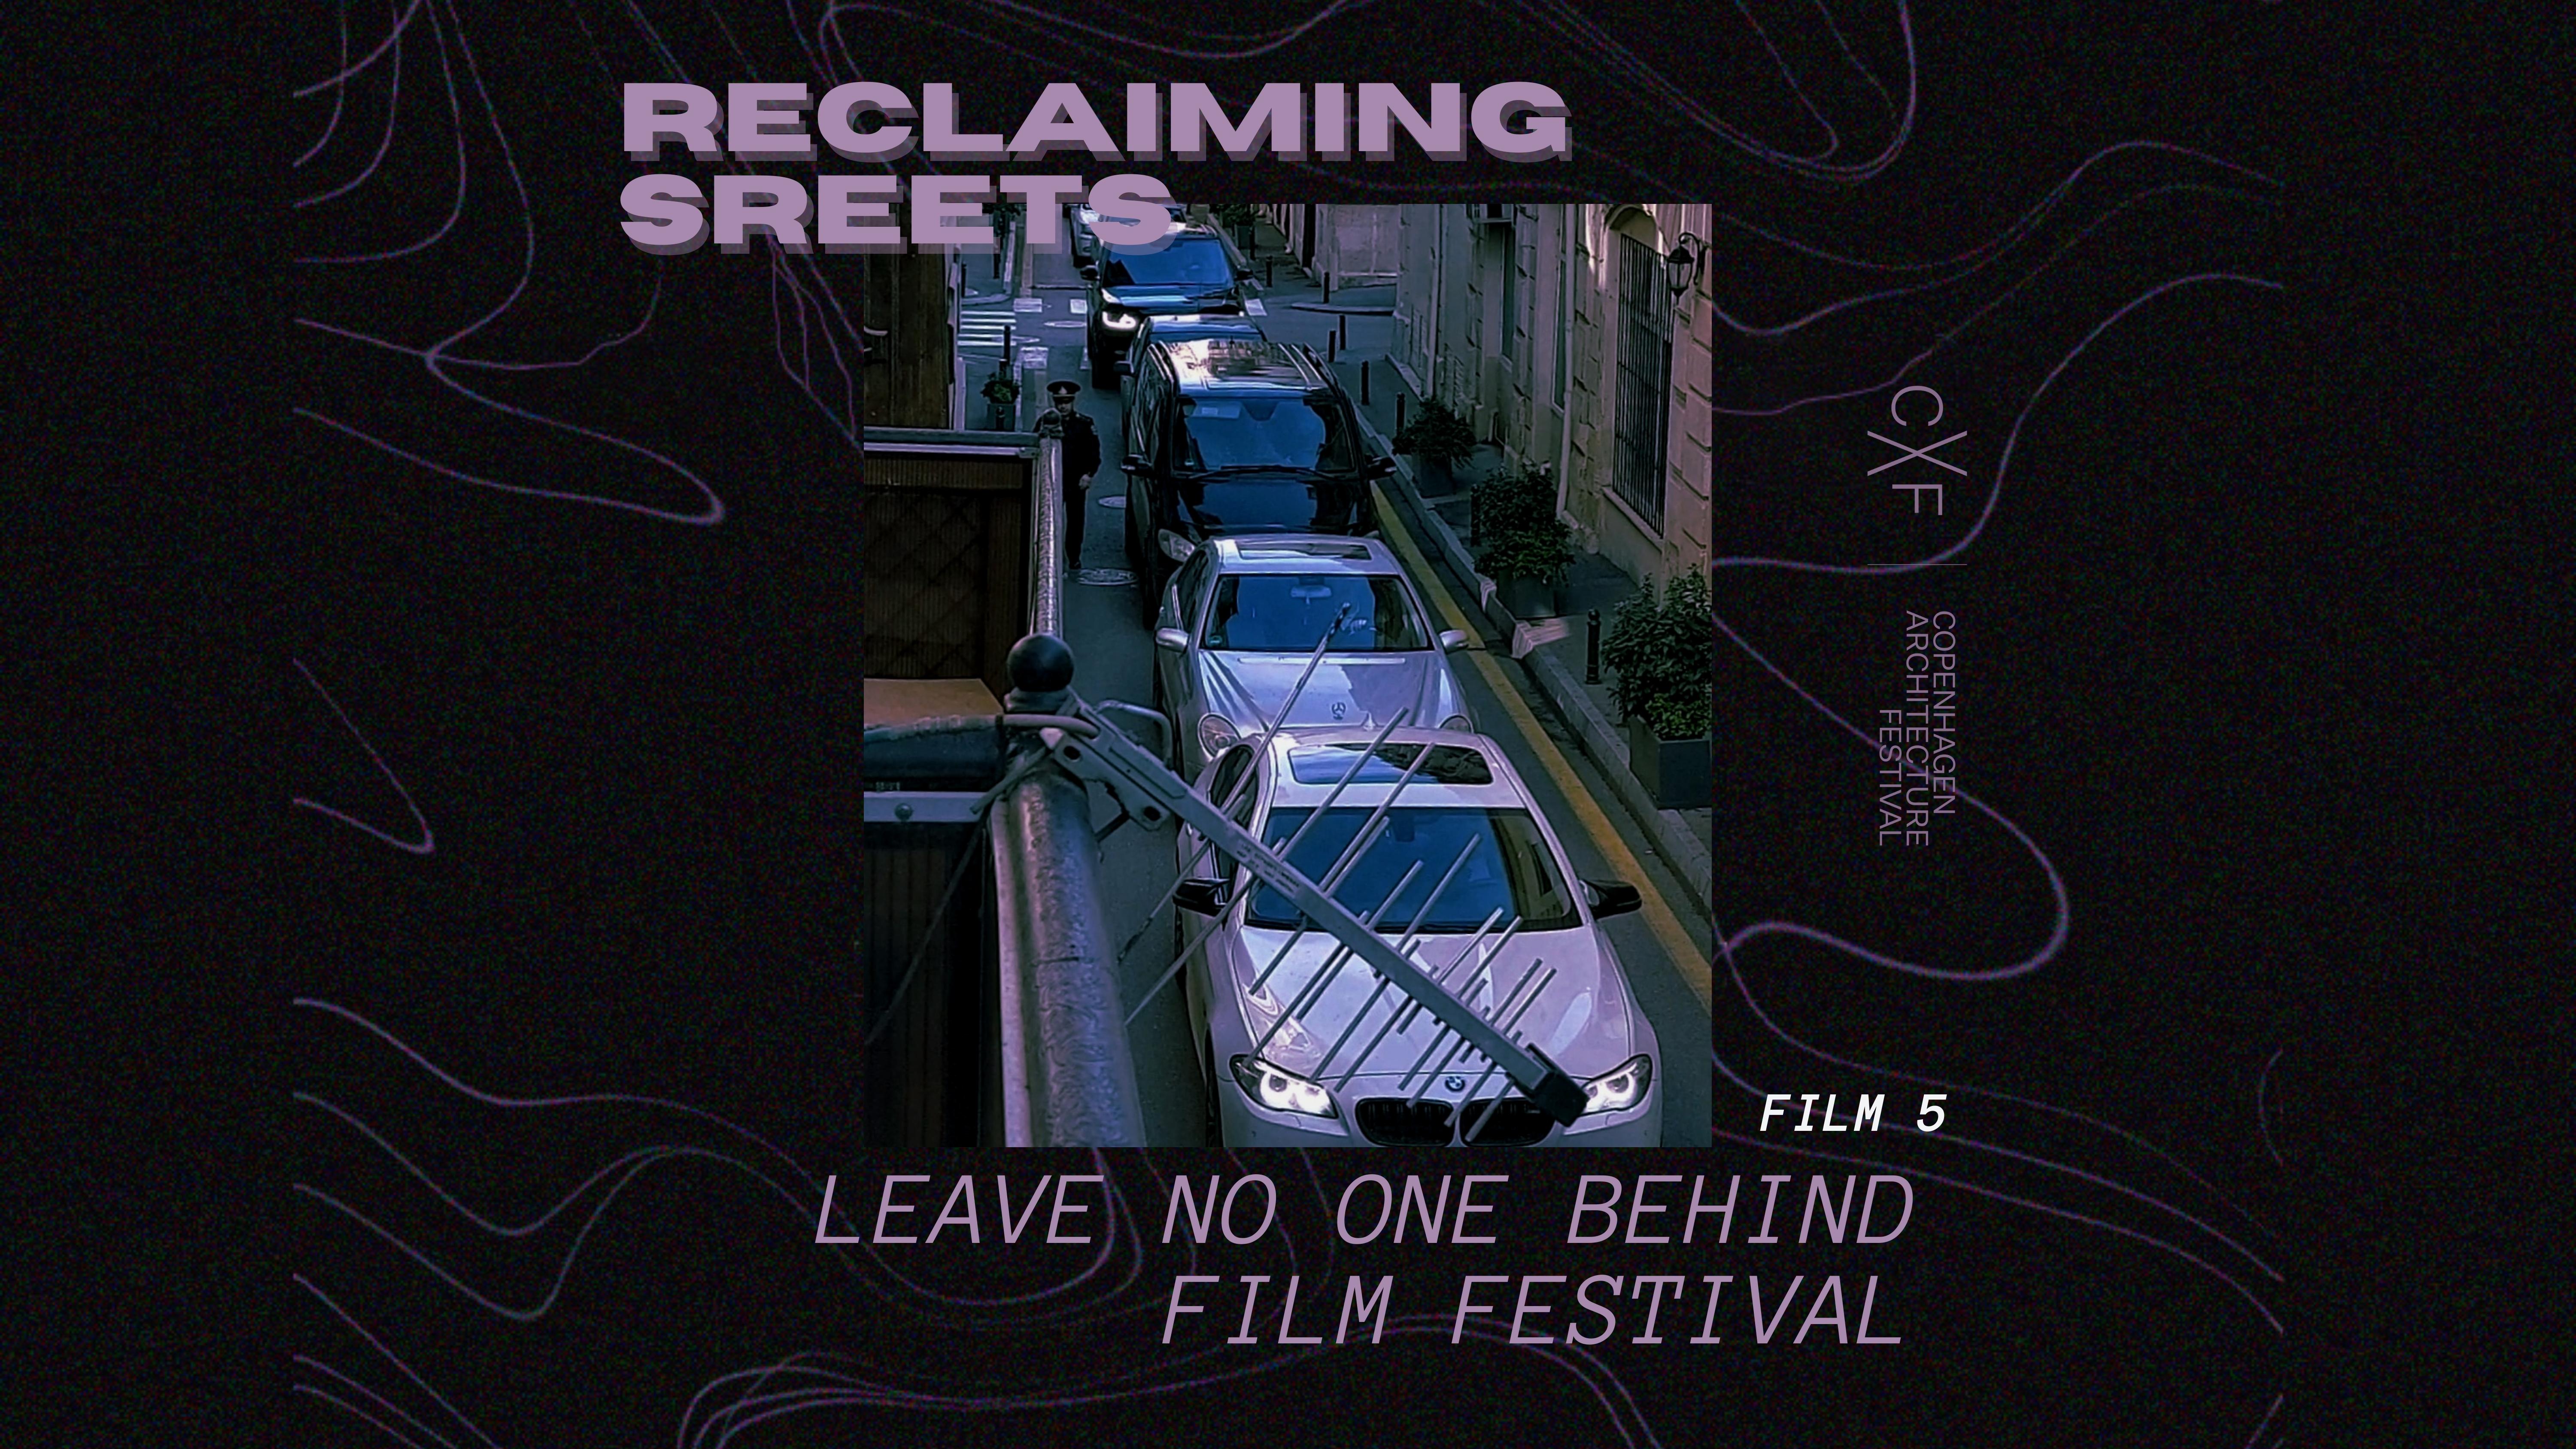 LNOB Film 5: “Reclaiming Streets”